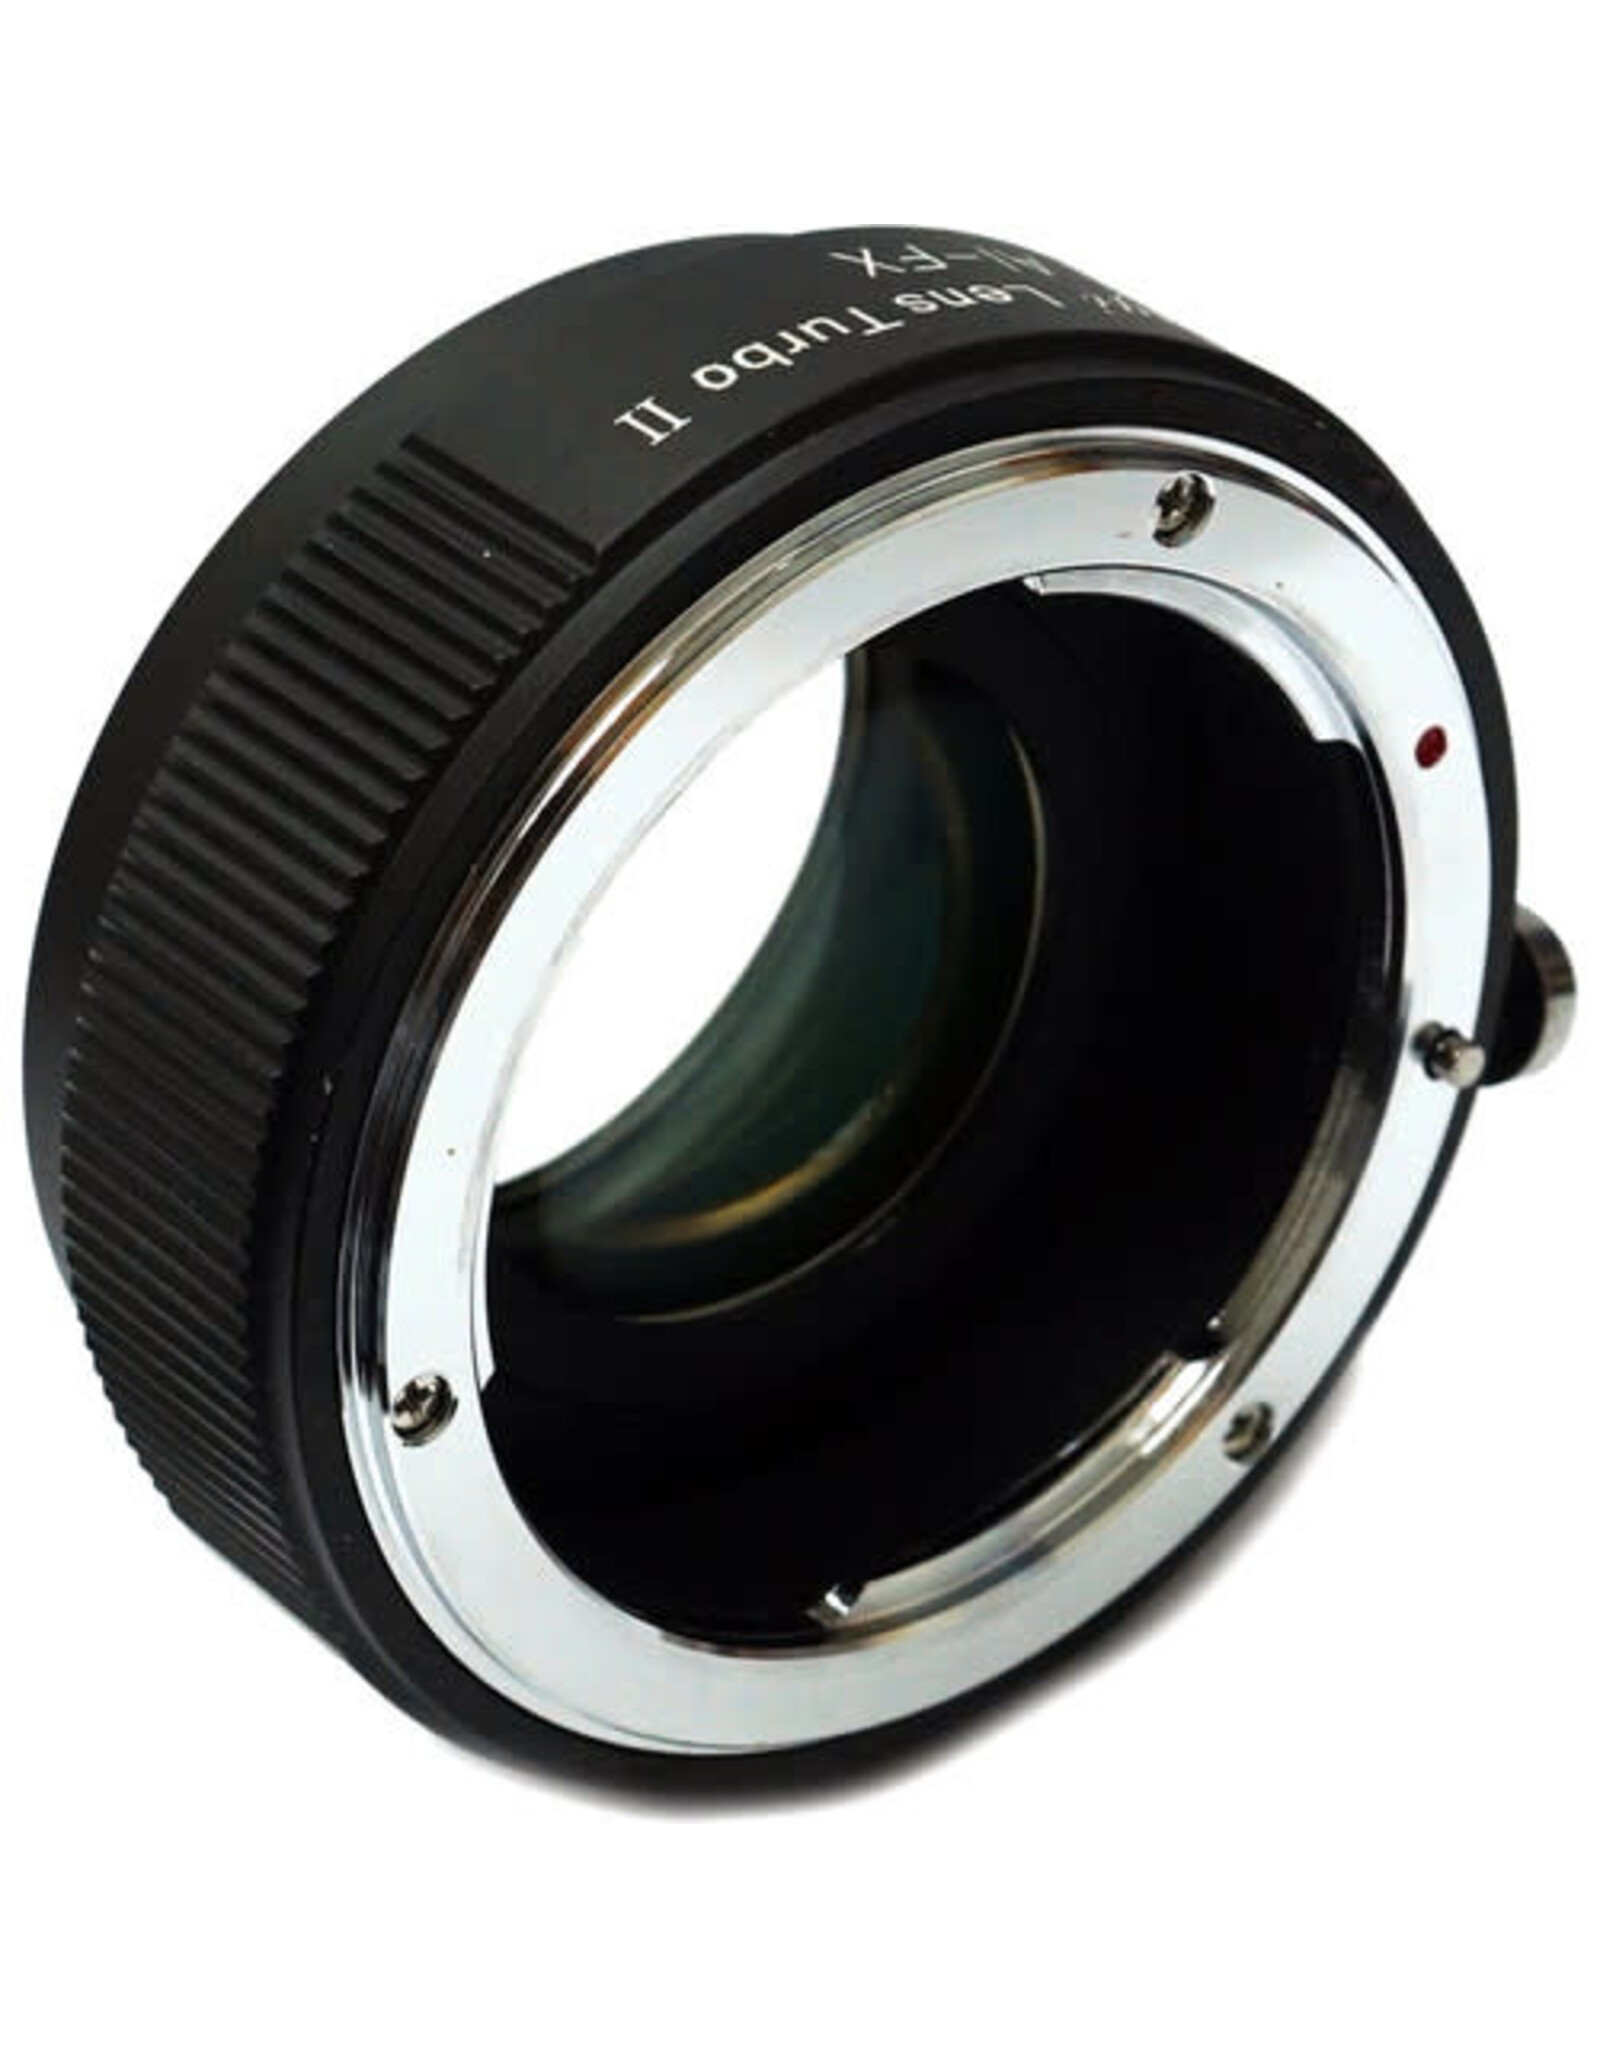 Mitakon Zhongyi Lens Turbo Adapter V2 for Full-Frame Canon EF Mount Lens to Fujifilm X Mount APS-C Camera